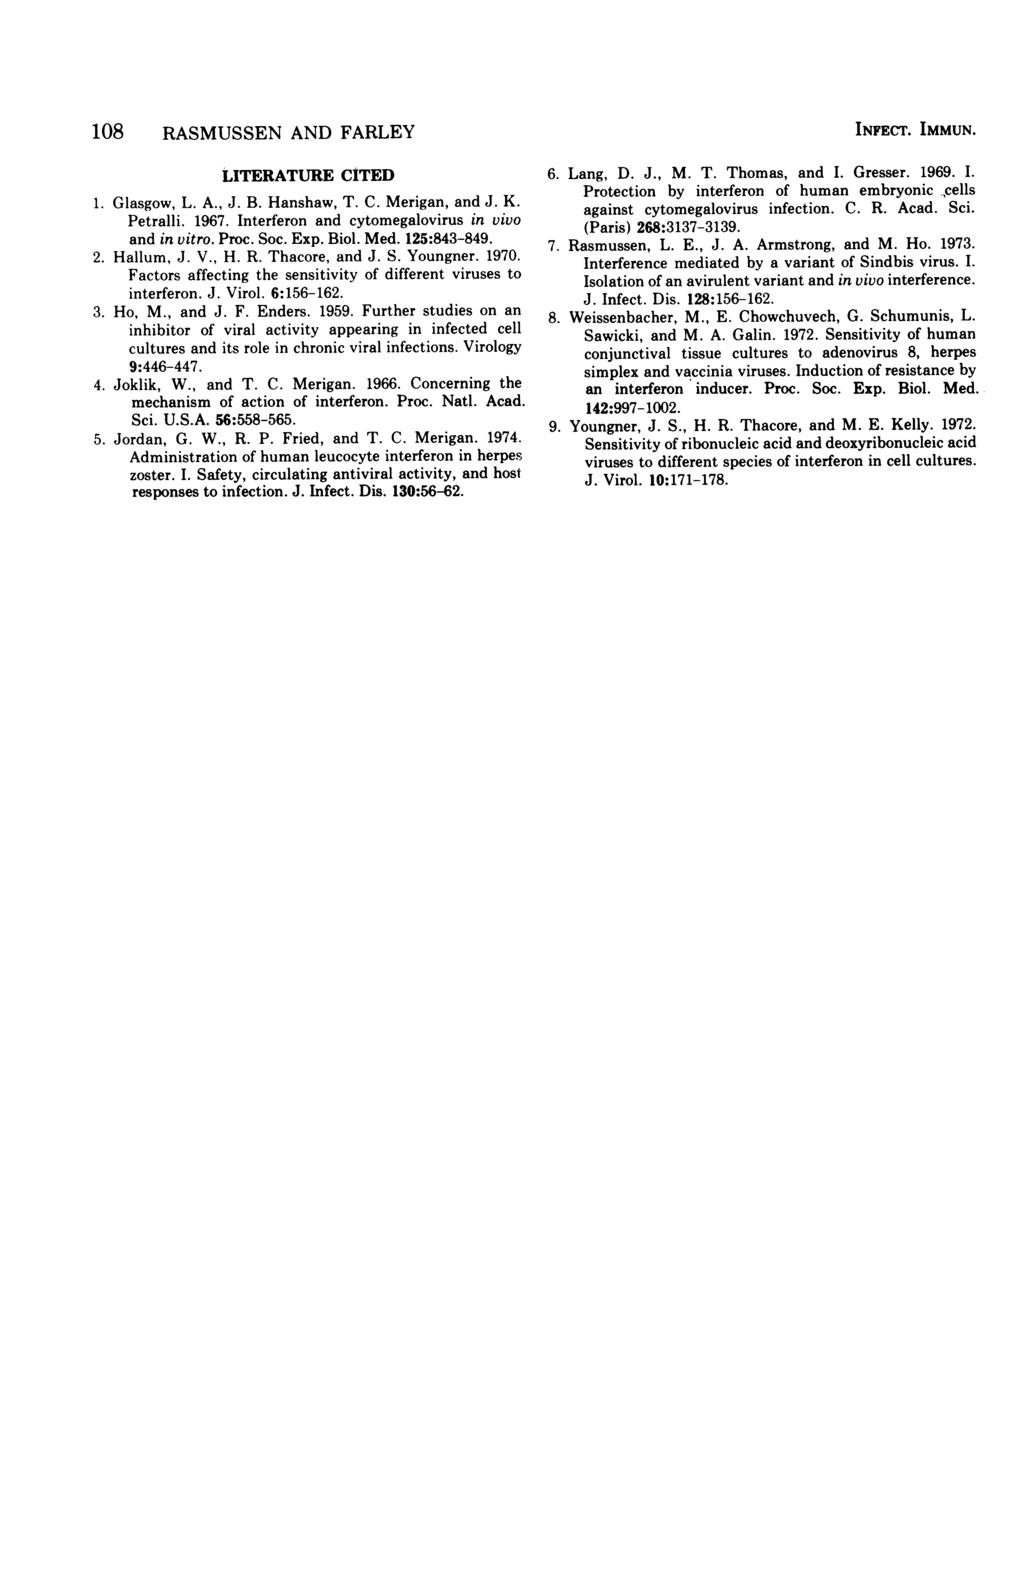 108 RASMUSSEN AND FARLEY LITERATURE CITED 1. Glasgow, L. A., J. B. Hanshaw, T. C. Merigan, and J. K. Petralli. 1967. Interferon and cytomegalovirus in vivo and in vitro. Proc. Soc. Exp. Biol. Med.